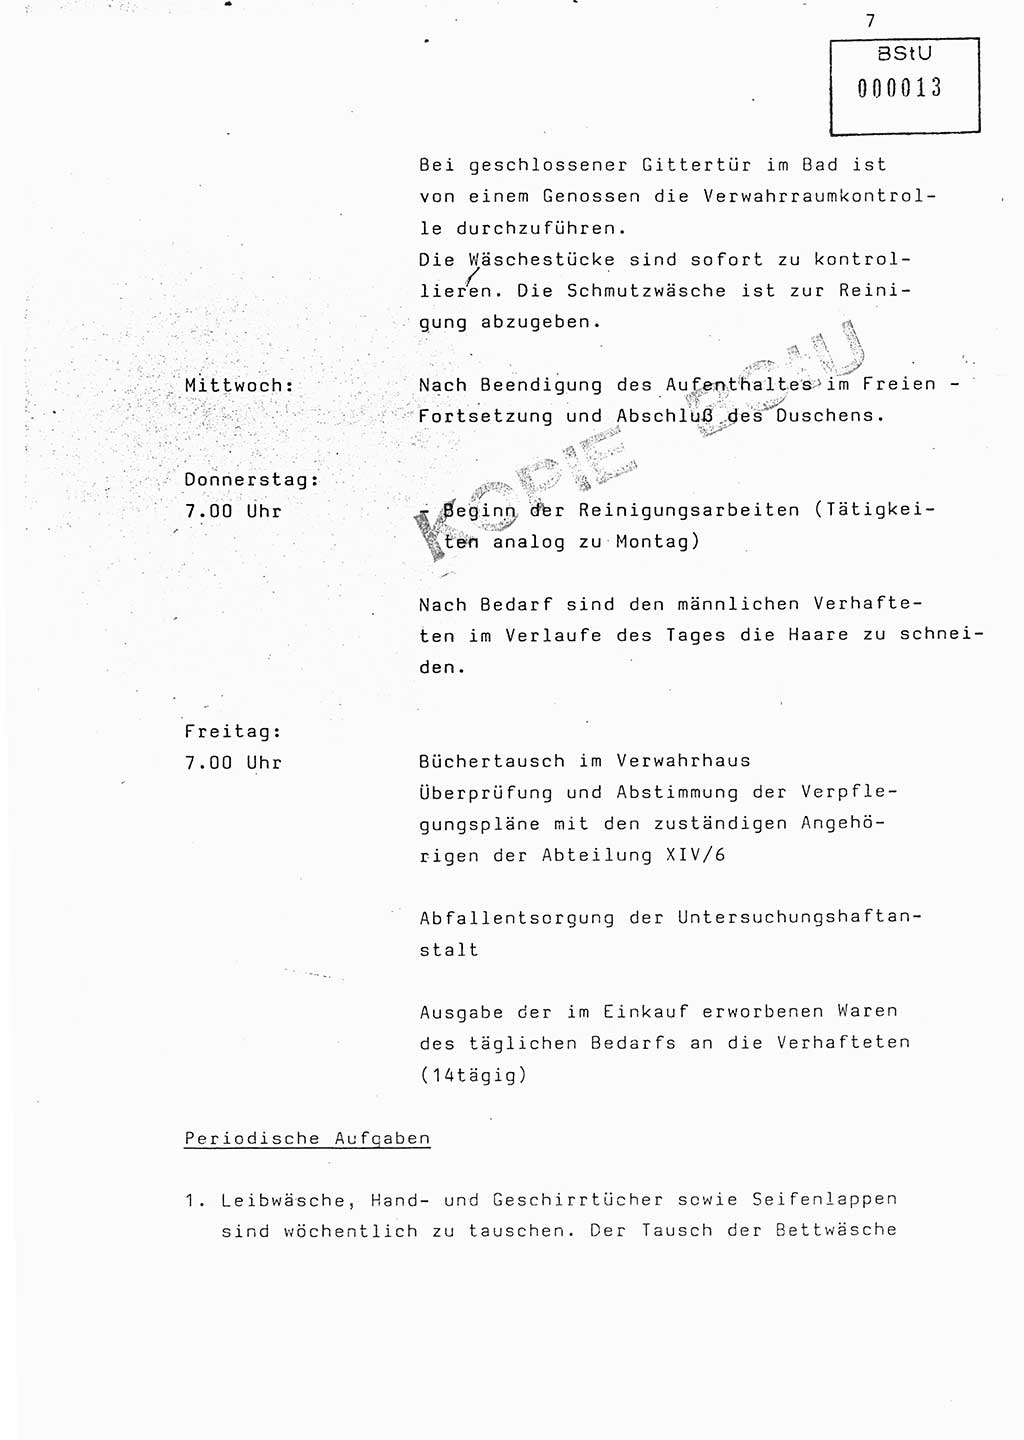 Fachschulabschlußarbeit Oberleutnant Bernd Mekelburg (Abt. ⅩⅣ/2), Oberleutnant Tilo Lilpopp (Abt. ⅩⅣ/2), Ministerium für Staatssicherheit (MfS) [Deutsche Demokratische Republik (DDR)], Abteilung ⅩⅣ, o.D., o.O, o.J., ca. 1986 wg. Bez. DA 1/86, Seite 7 (FS-Abschl.-Arb. MfS DDR Abt. ⅩⅣ 1986, S. 7)